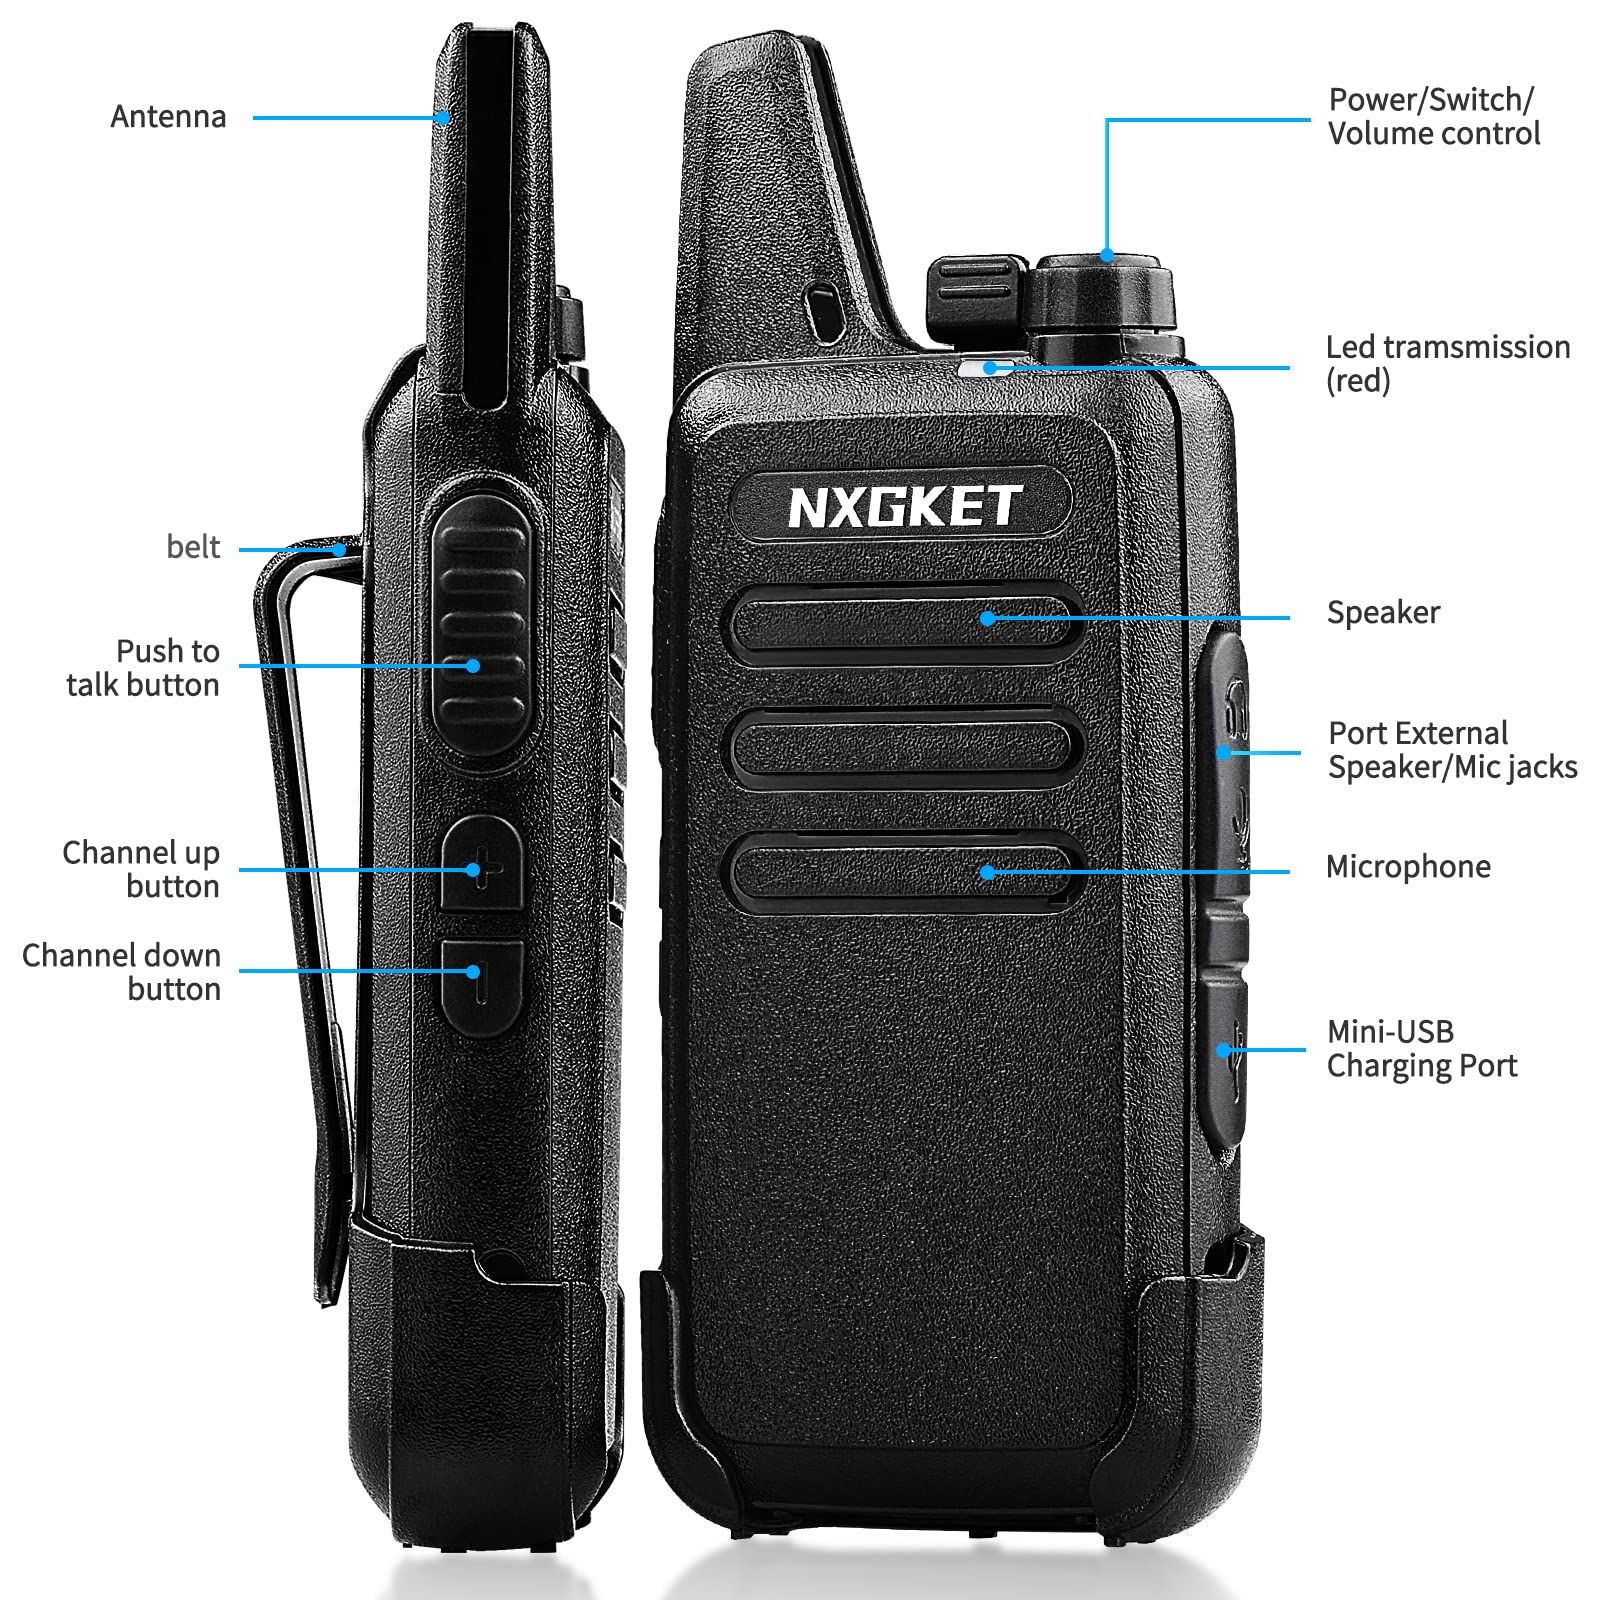 NXGKET Walkie Talkies for Adults Long Range, Rechargeable 2-Way Radio